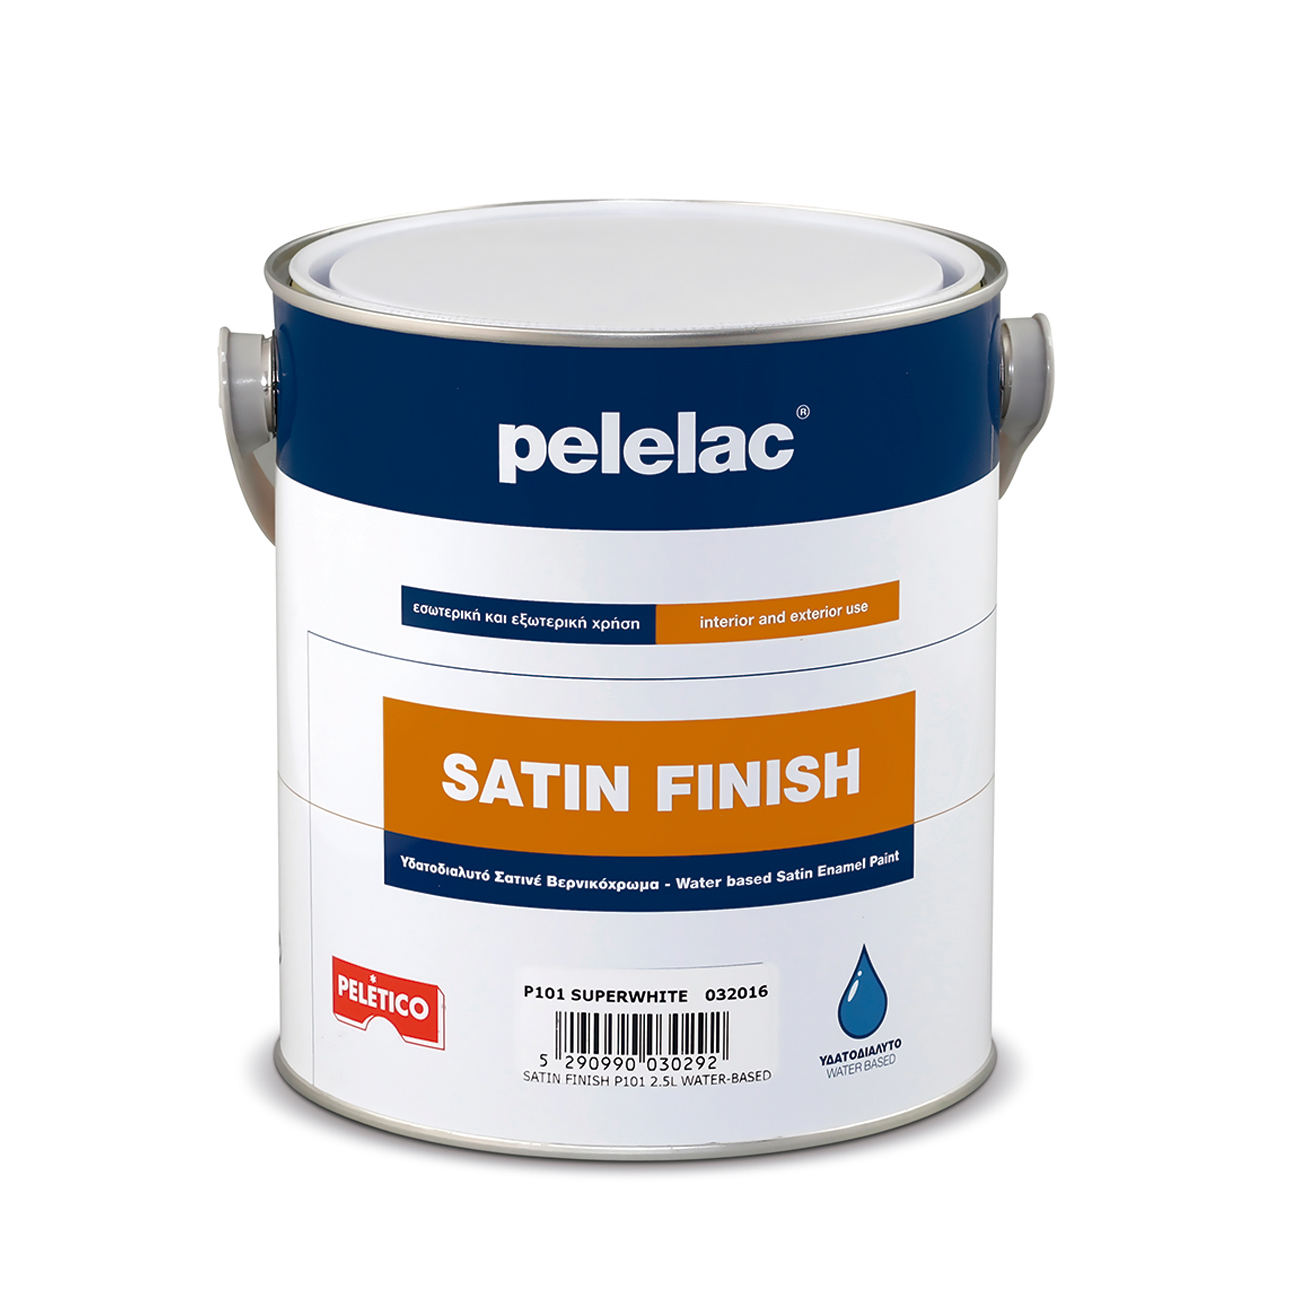 PELELAC SATIN FINISH SUPERWHITE P101 2.5L WATER-BASED